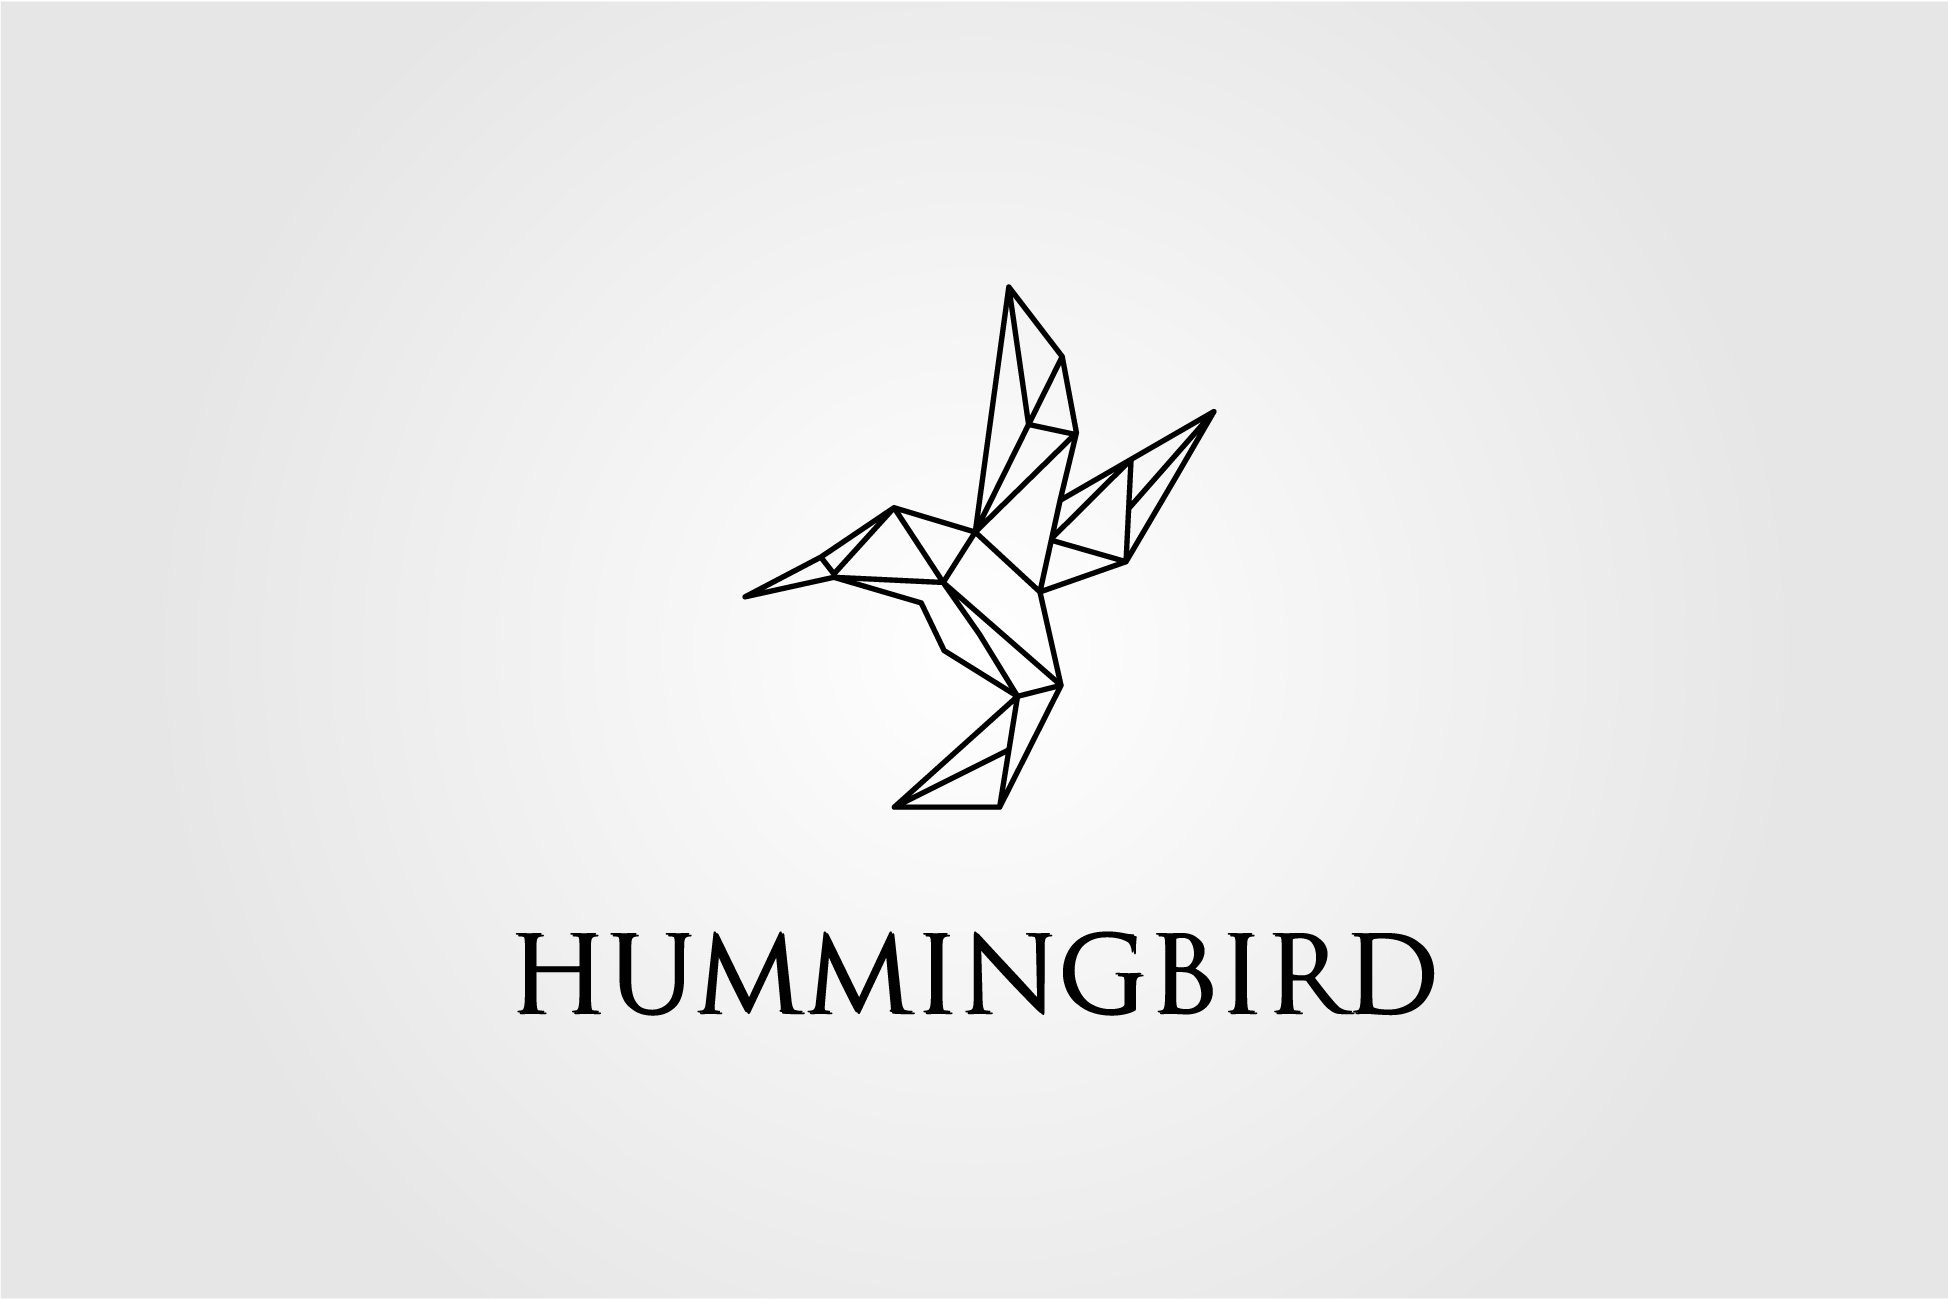 gold hummingbirds line art logo cover image.